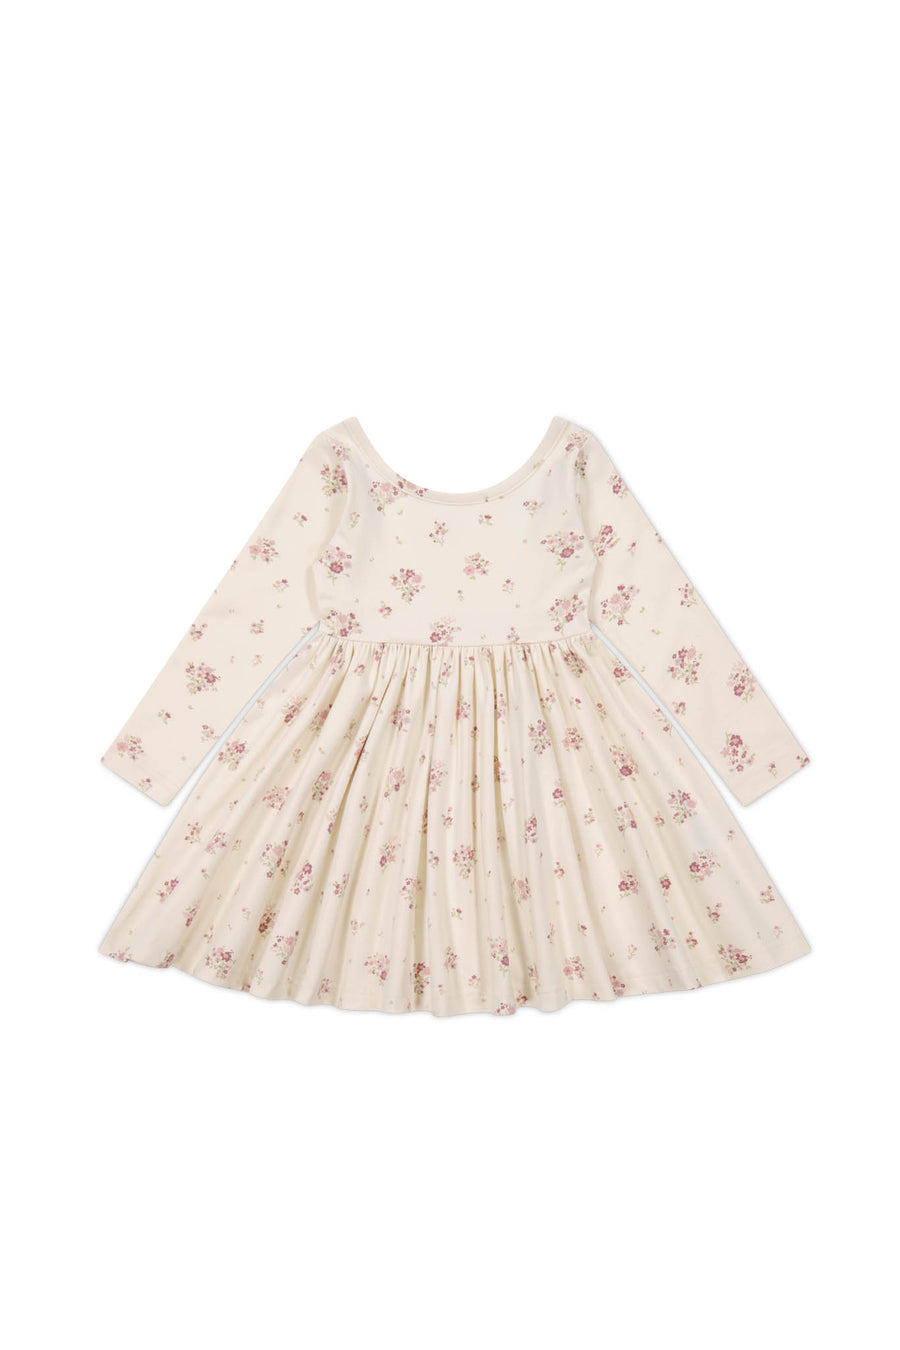 Organic Cotton Tallulah Dress - Lauren Floral Tofu Childrens Dress from Jamie Kay NZ